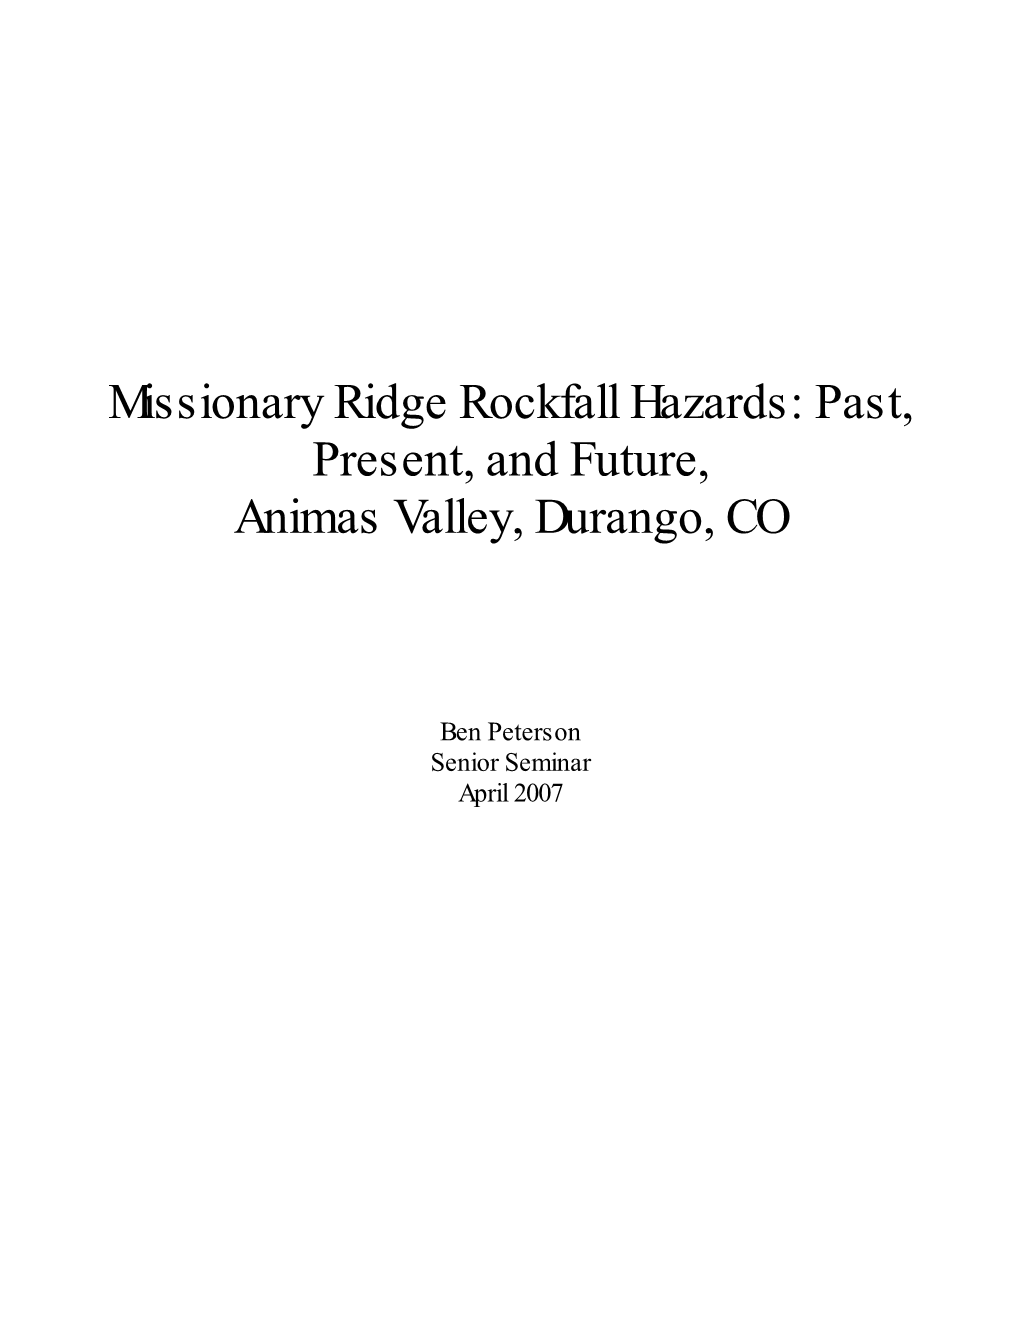 TITLE: Morphology of the Missionary Ridge Rockfall, Durango, Co